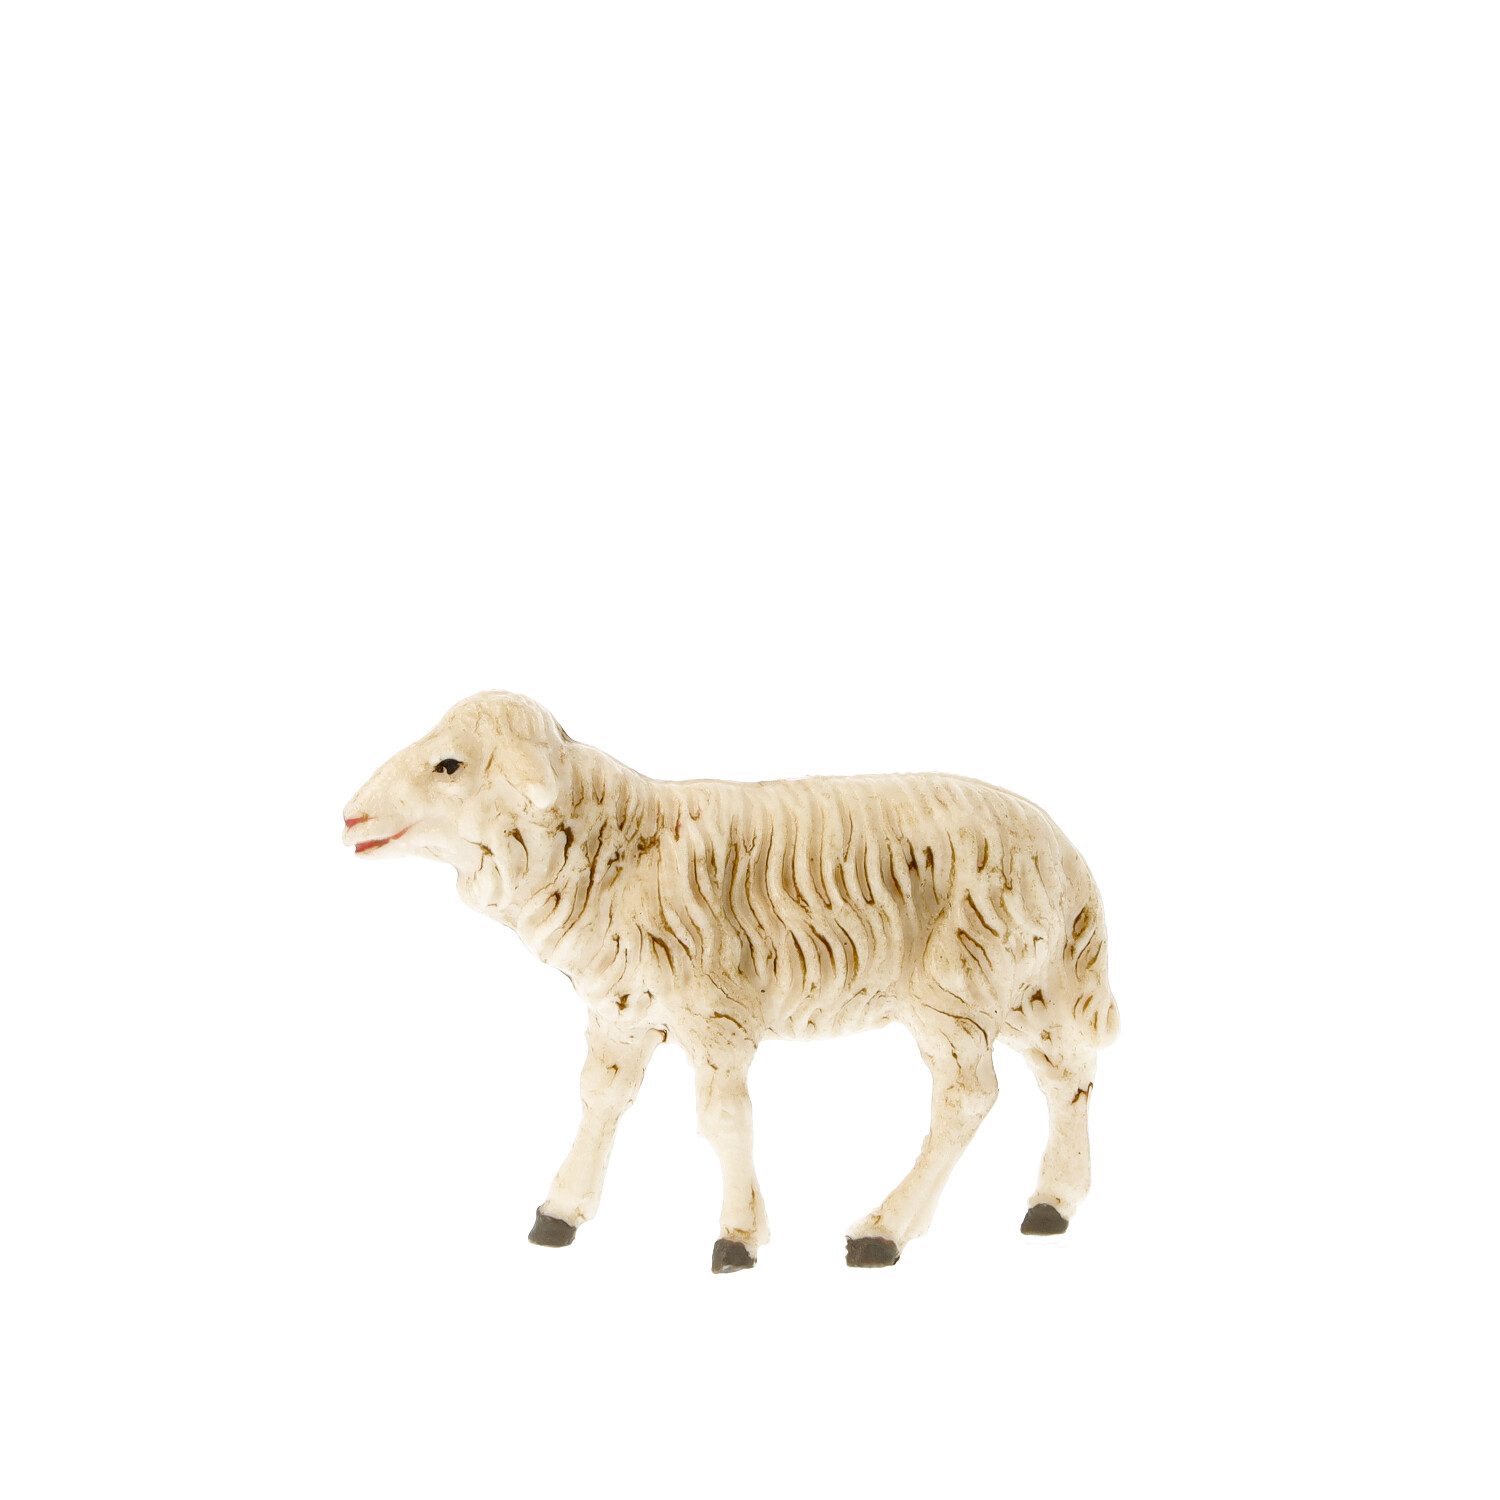 Sheep straight on - Marolin Plastik - Resin Nativity figure - made in Germany